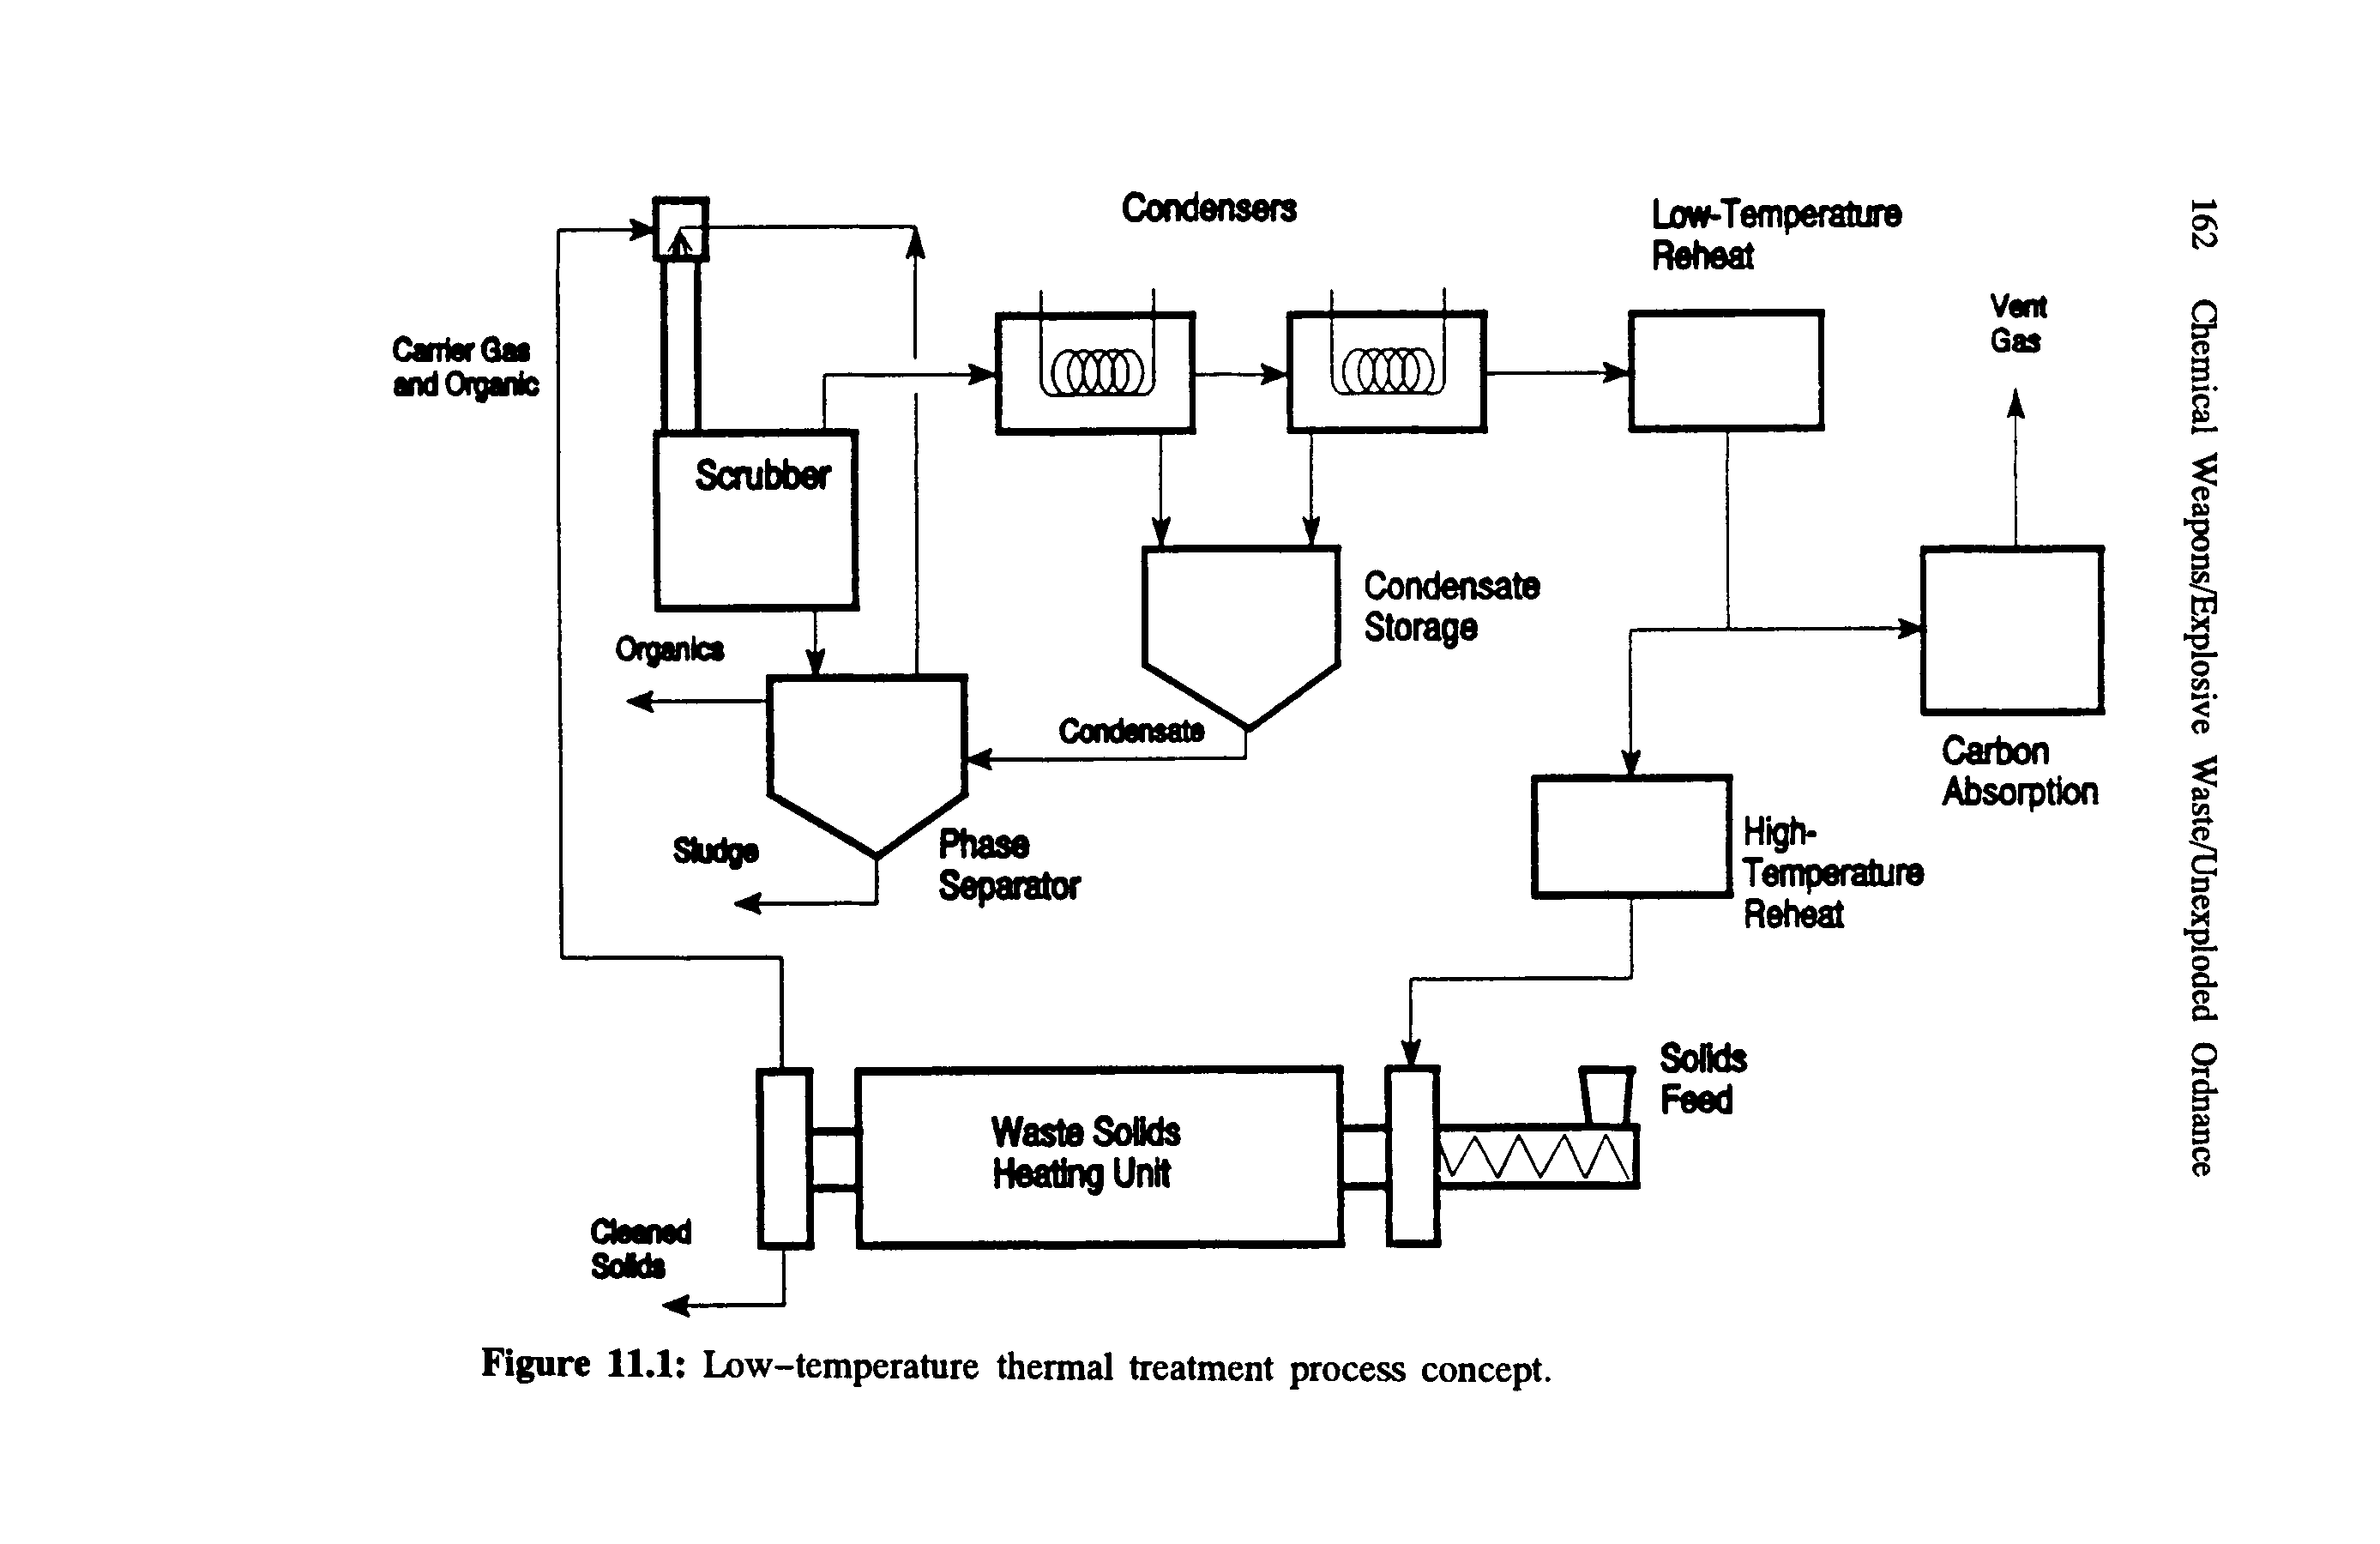 Figure 11.1 Low-temperature thermal treatment process concept.